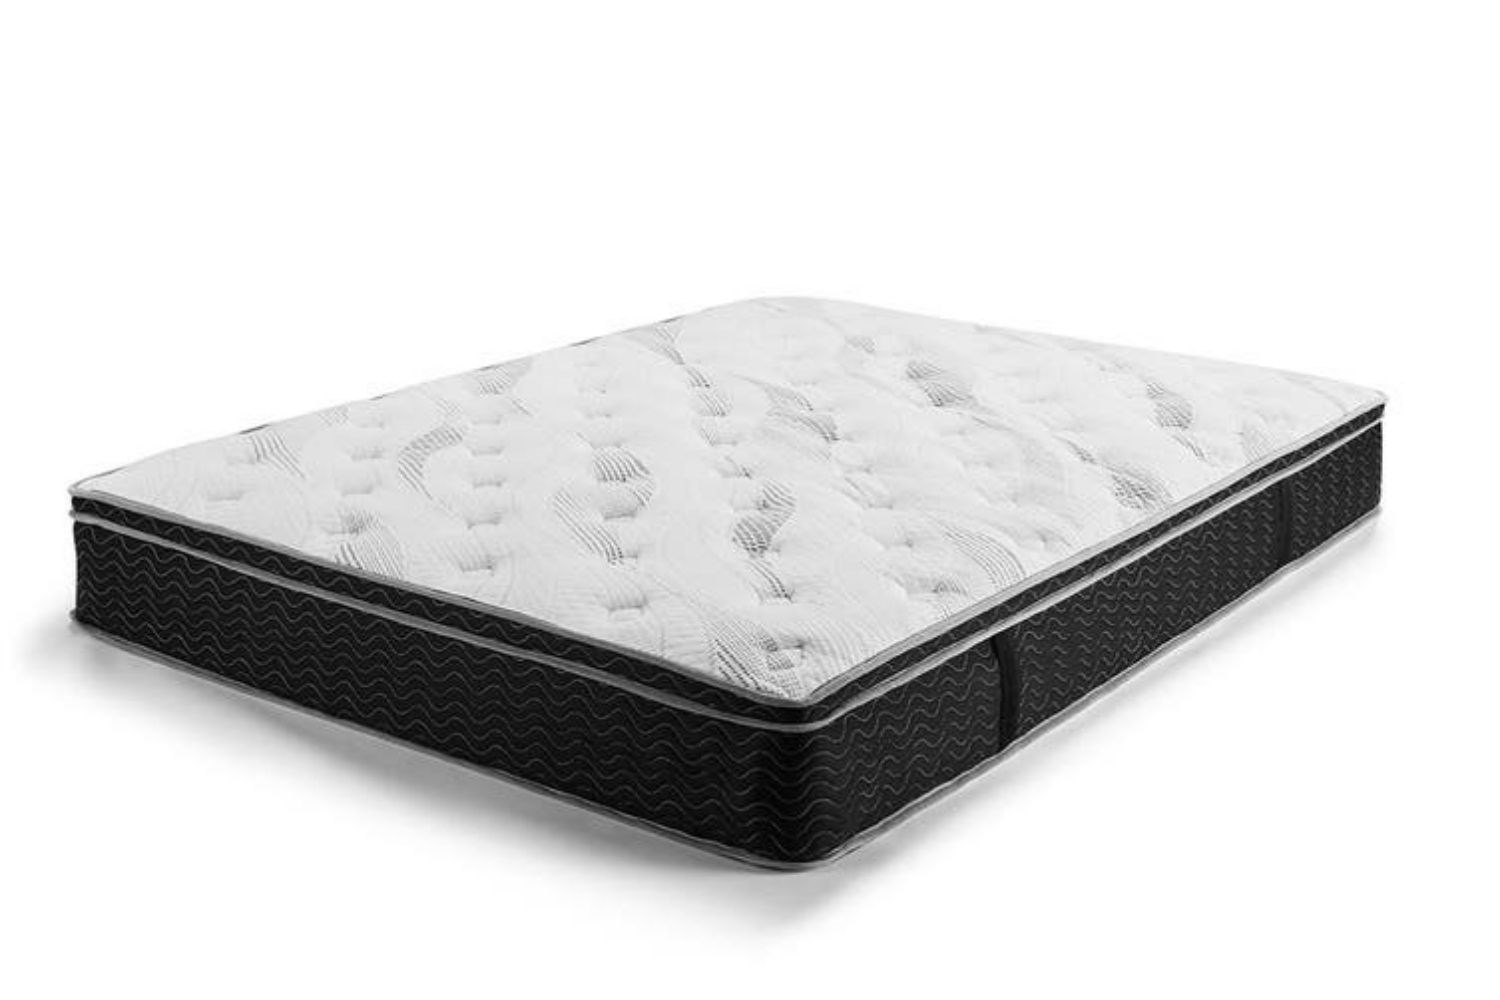 homedics revive 9 gel memory foam mattress